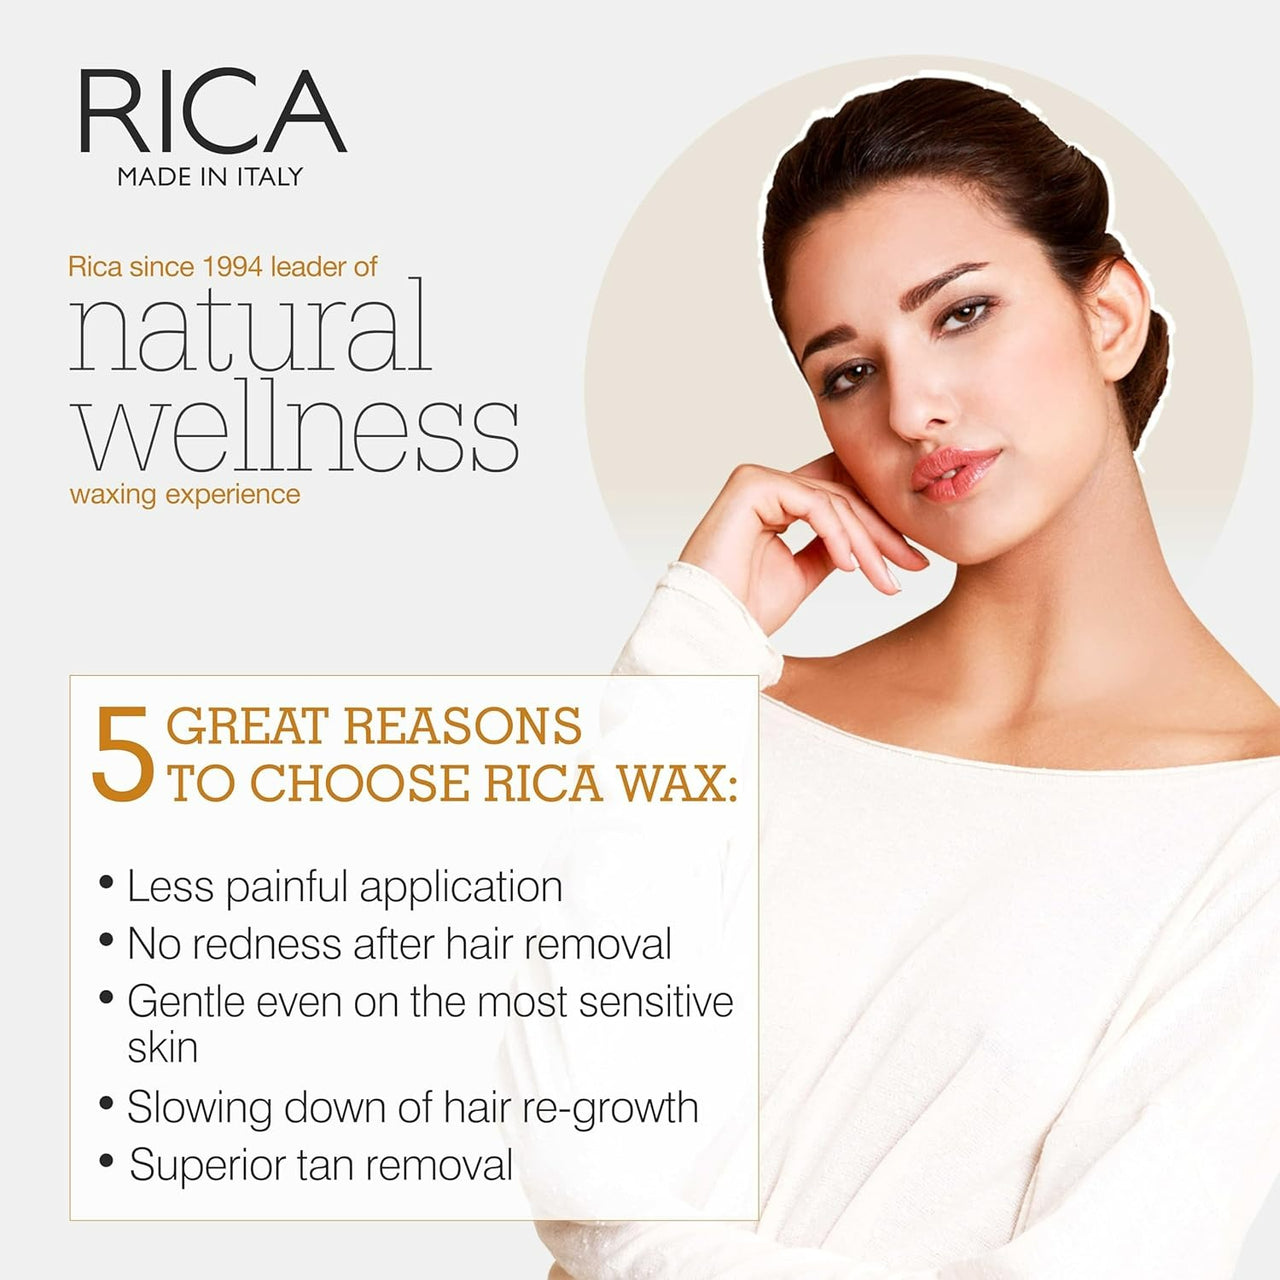 Rica Milk Liposoluble Wax for Sensitive Skin - Distacart